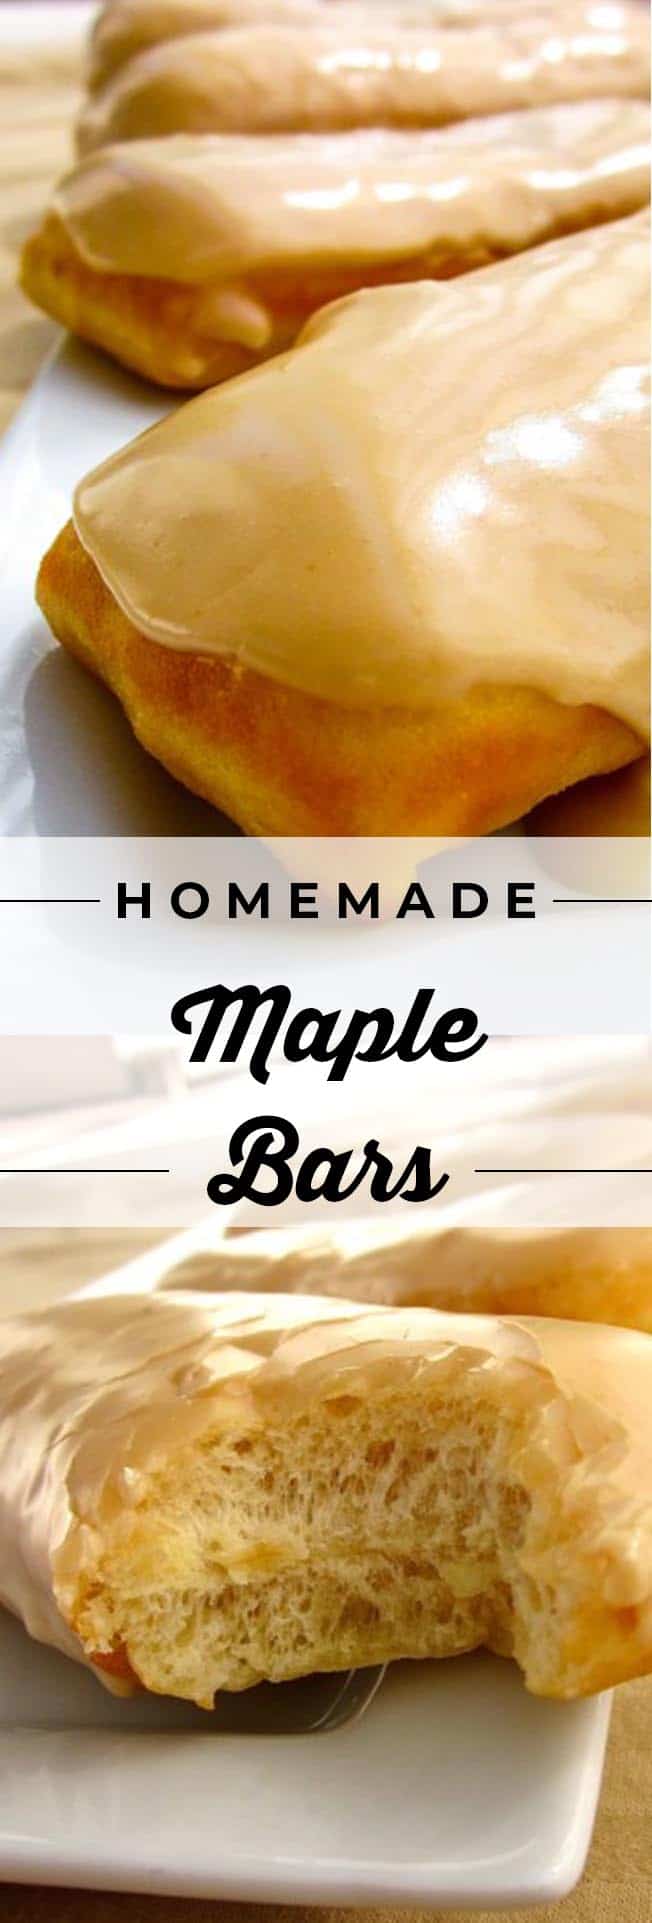 maple bars recipe